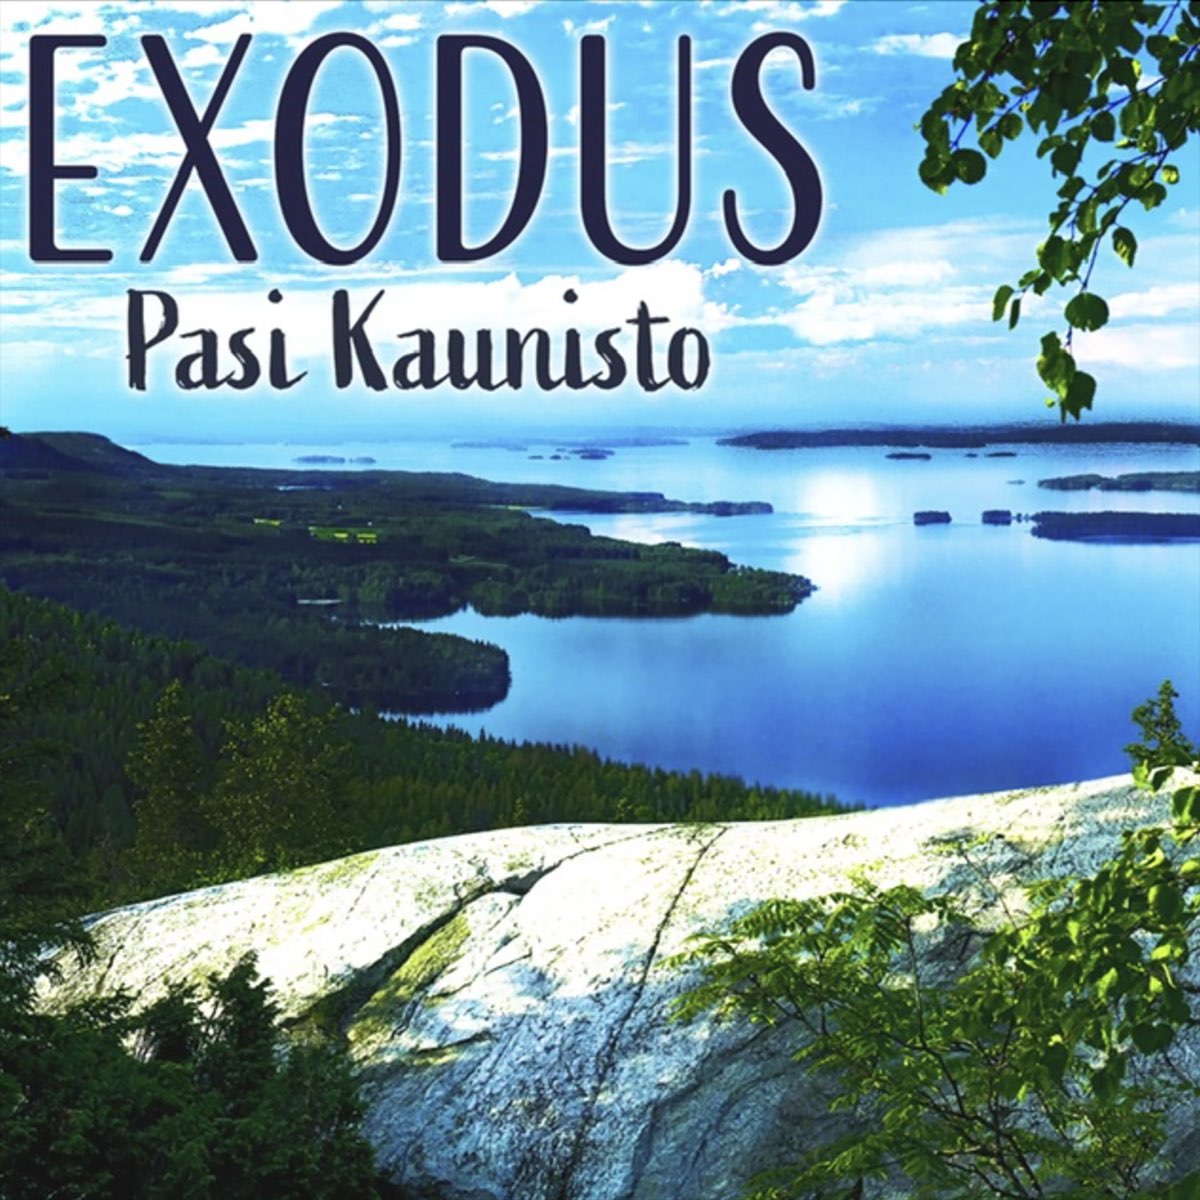 Exodus - Single by Pasi Kaunisto on Apple Music